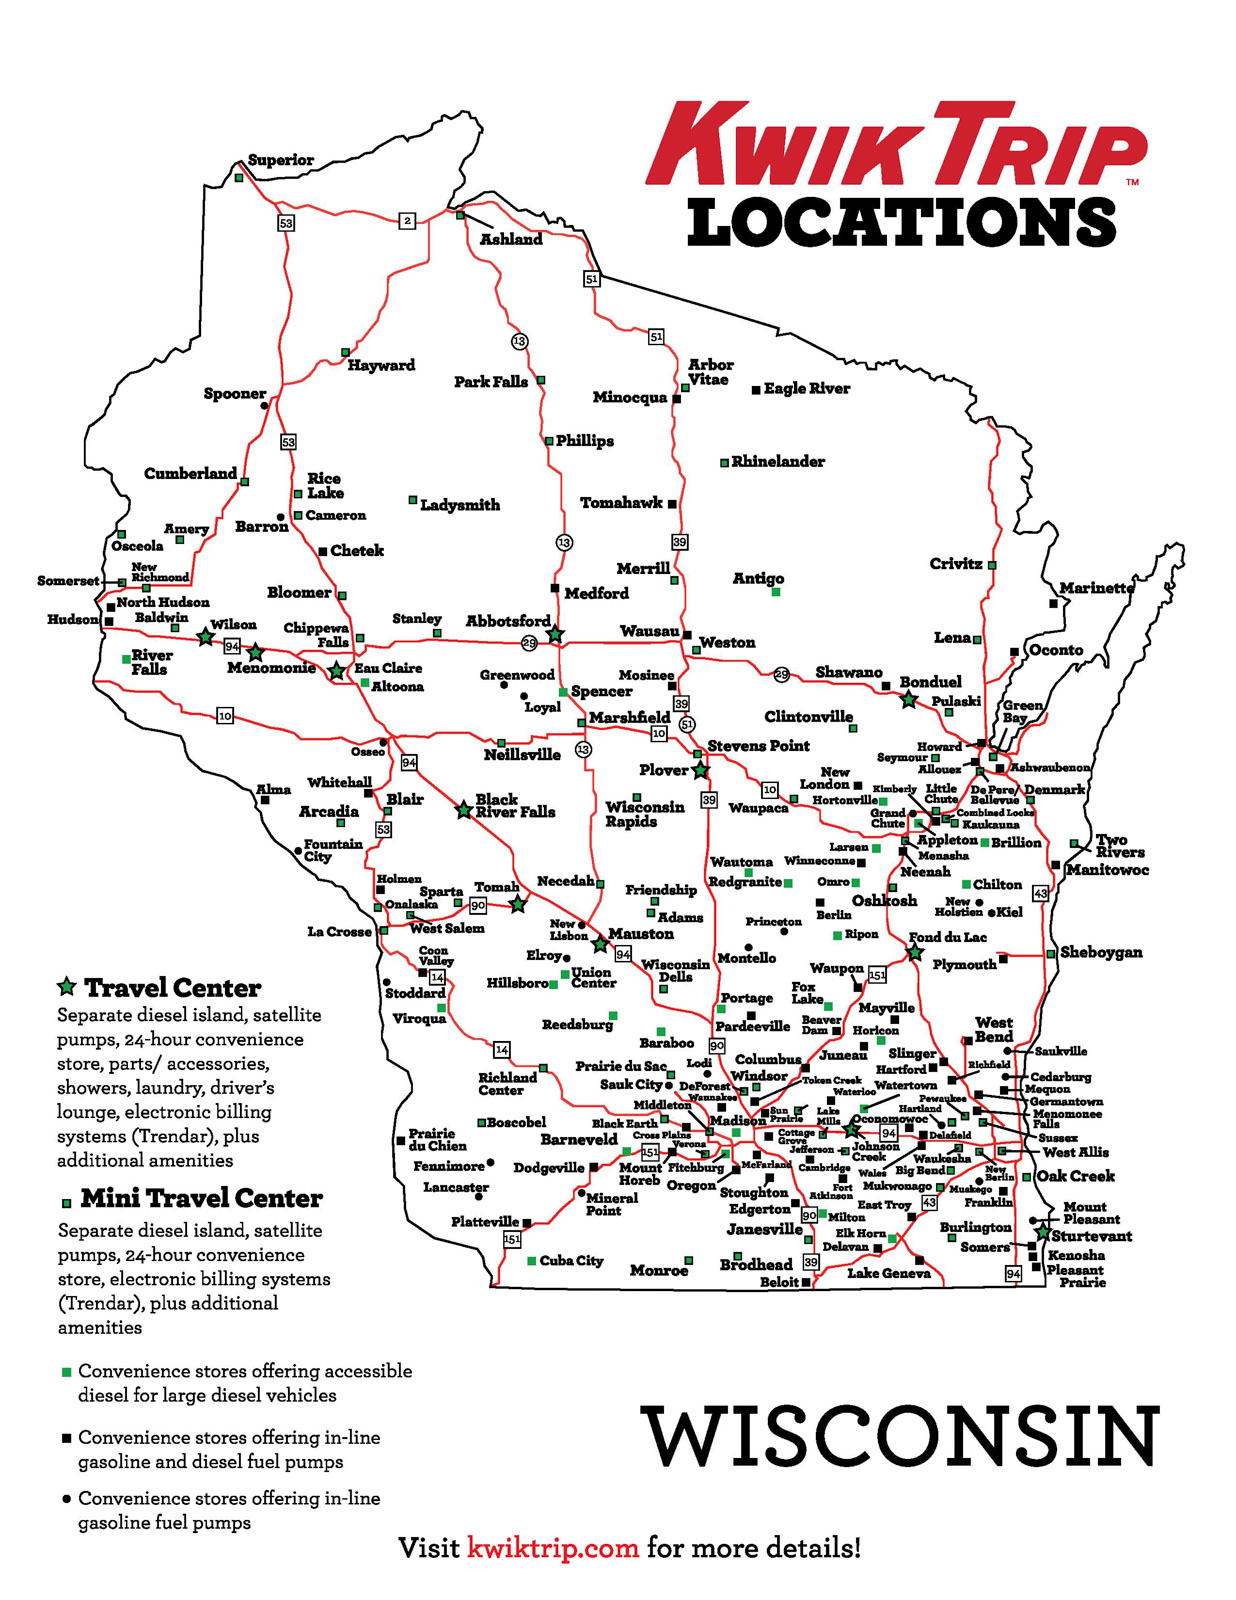 Kwik Trip Locations in Wisconsin